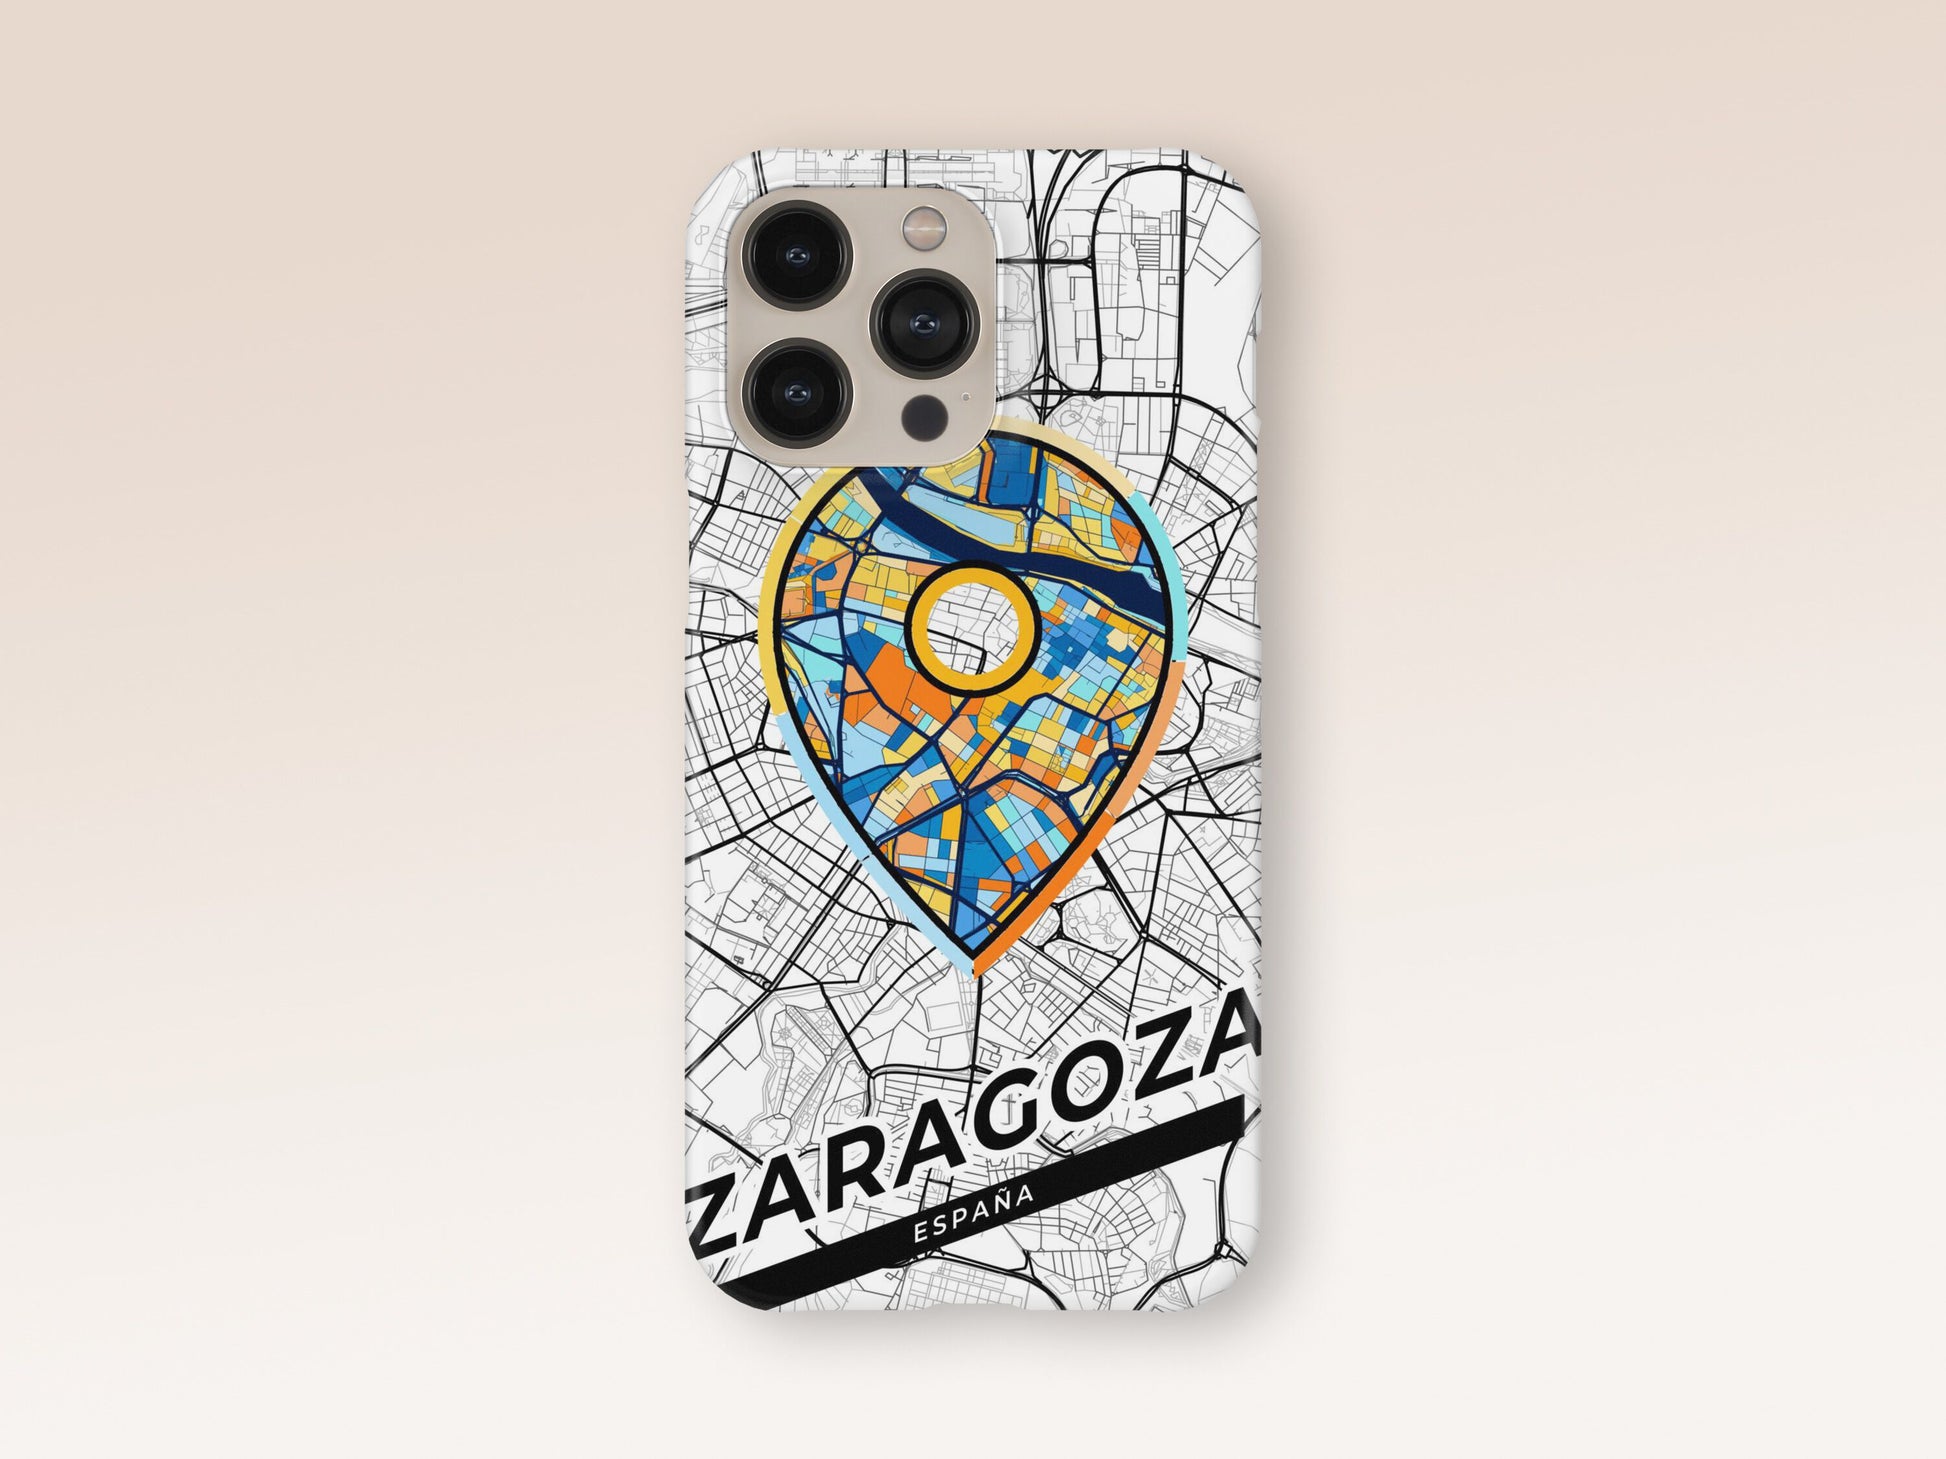 Zaragoza Spain slim phone case with colorful icon 1